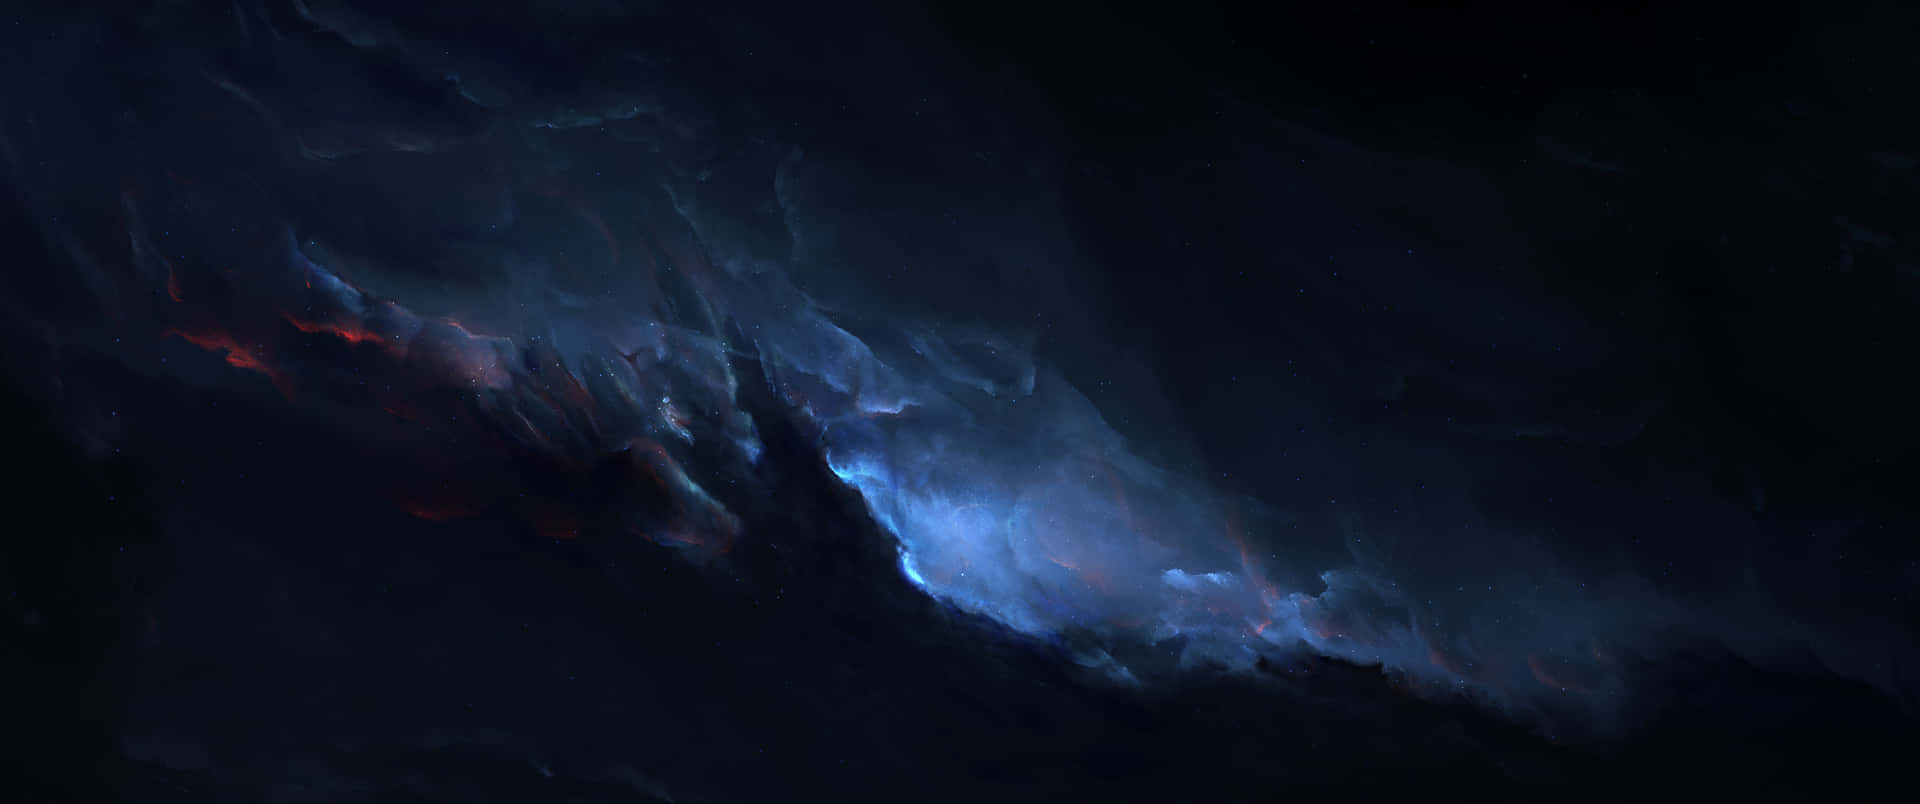 Fondode Pantalla Nebulosa Azul Oscuro De 3440x1440p.